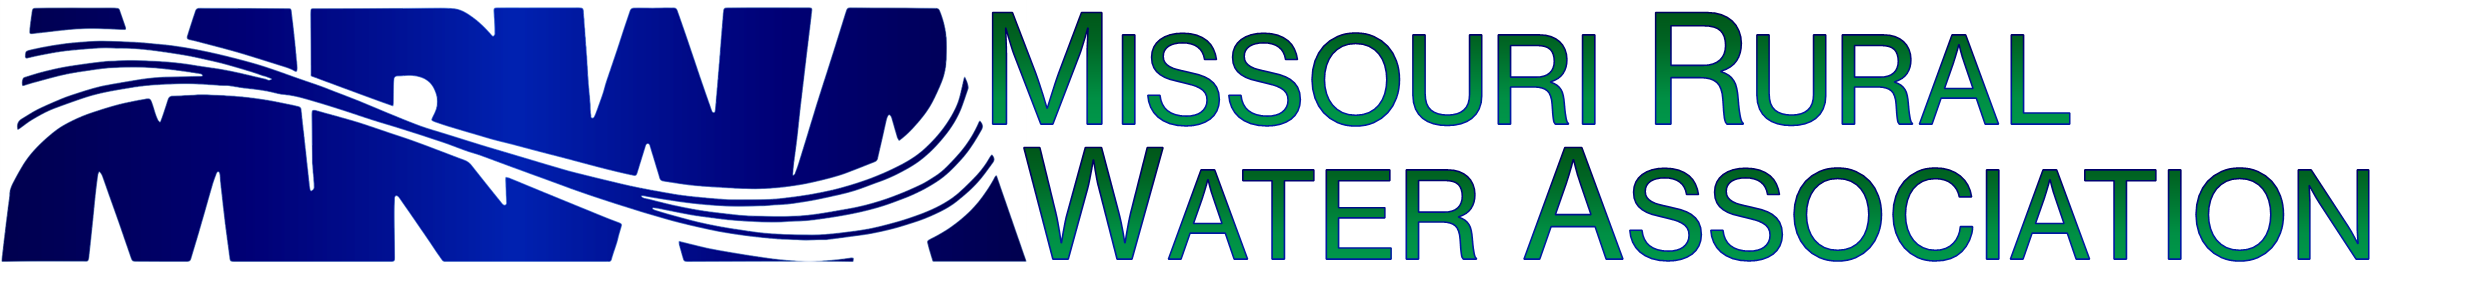 Missouri Rural Water Association